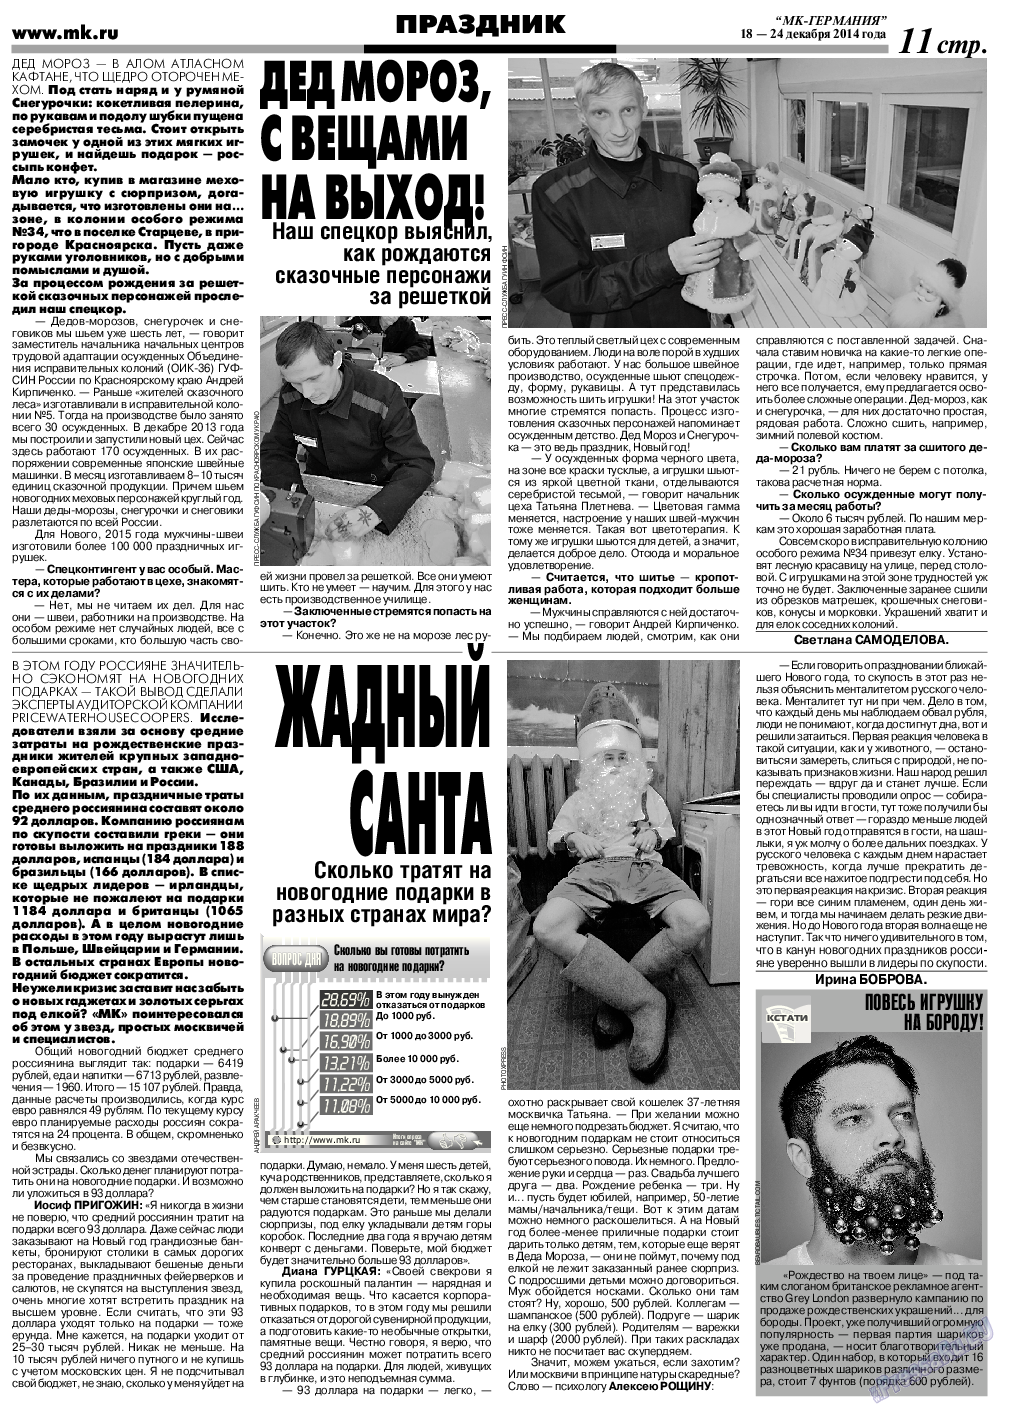 МК-Германия, газета. 2014 №51 стр.11